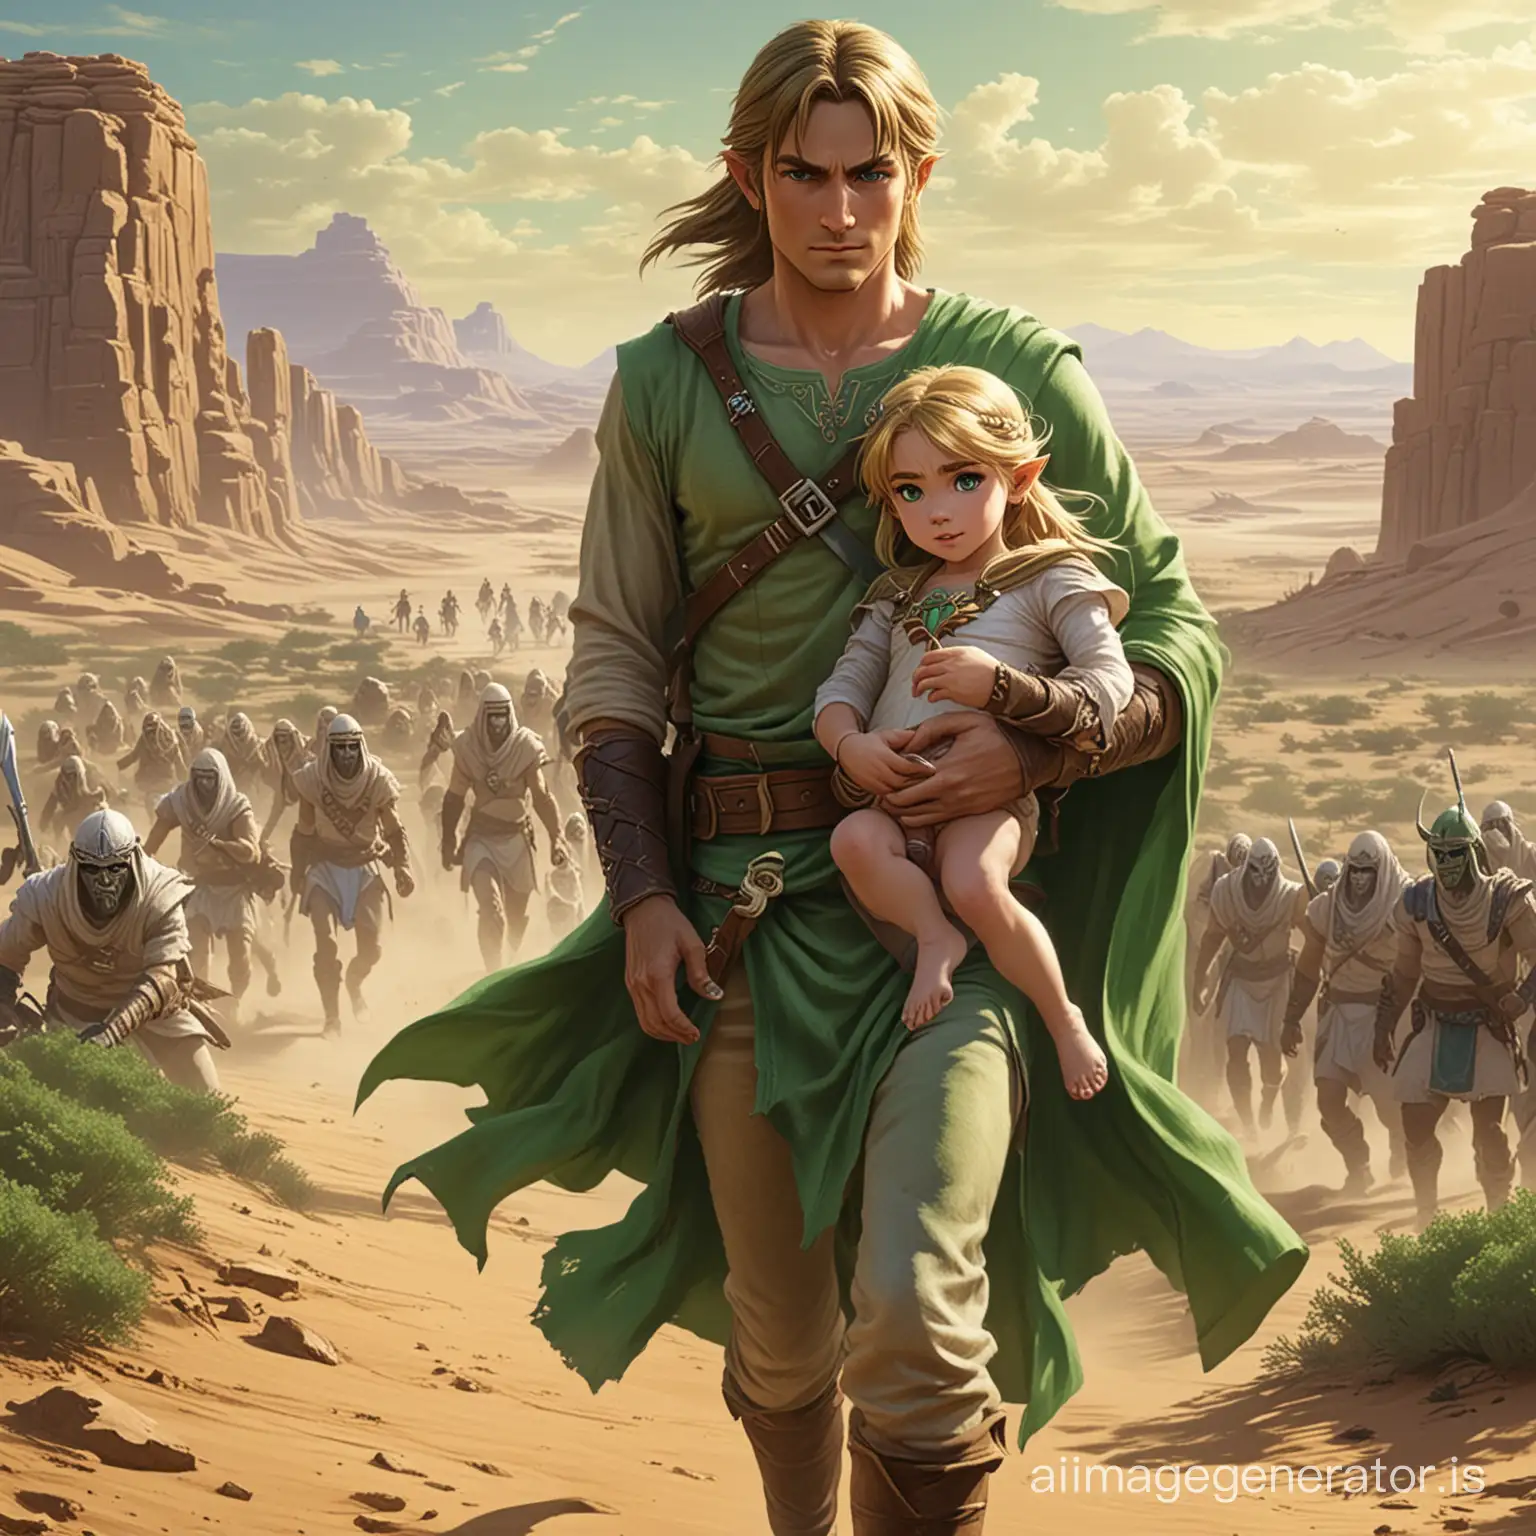 Heroic-Link-in-Green-Tunic-Rescues-Princess-Zelda-in-Desert-Chase